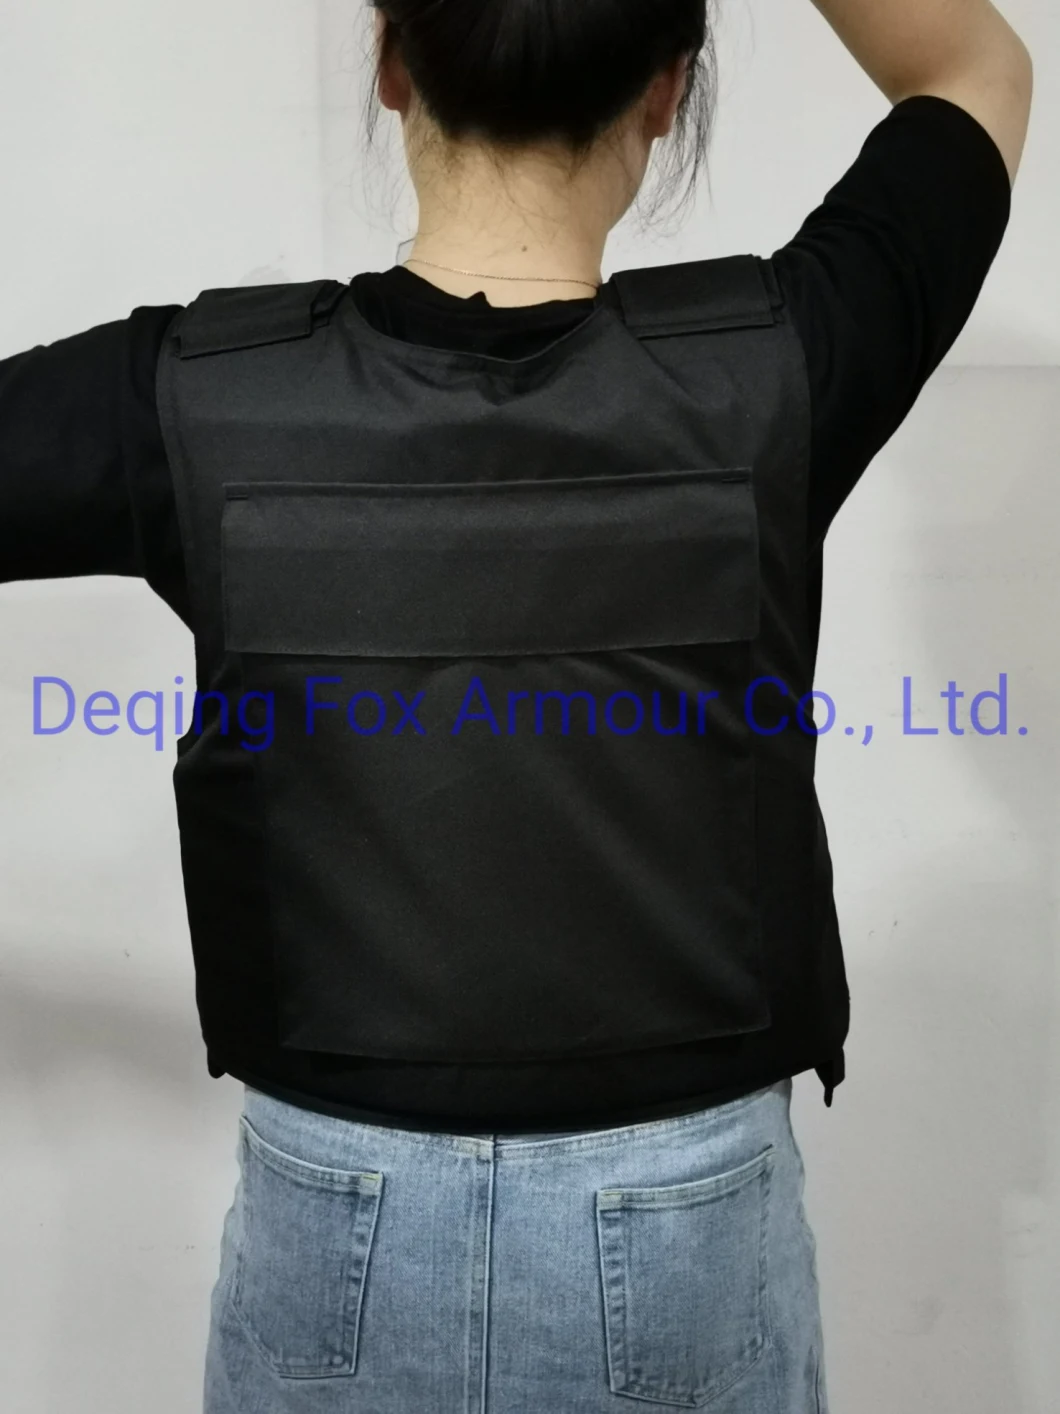 Nij Iiia Bulletproof Vest with Ballistic Plates Choice